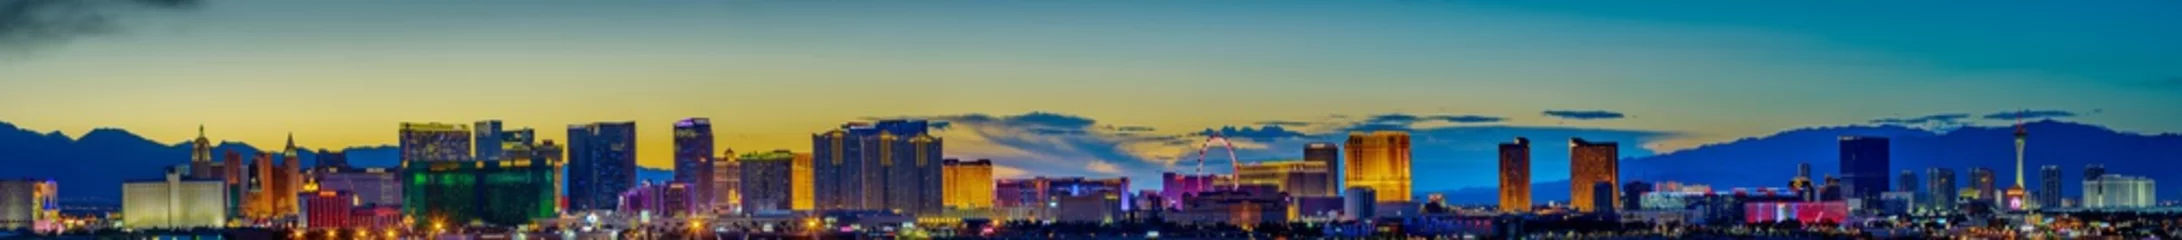 Foto auf Acrylglas Skyline-Blick bei Sonnenuntergang des berühmten Las Vegas Strip in Weltklasse-Hotels und Casinos, NV © yooranpark